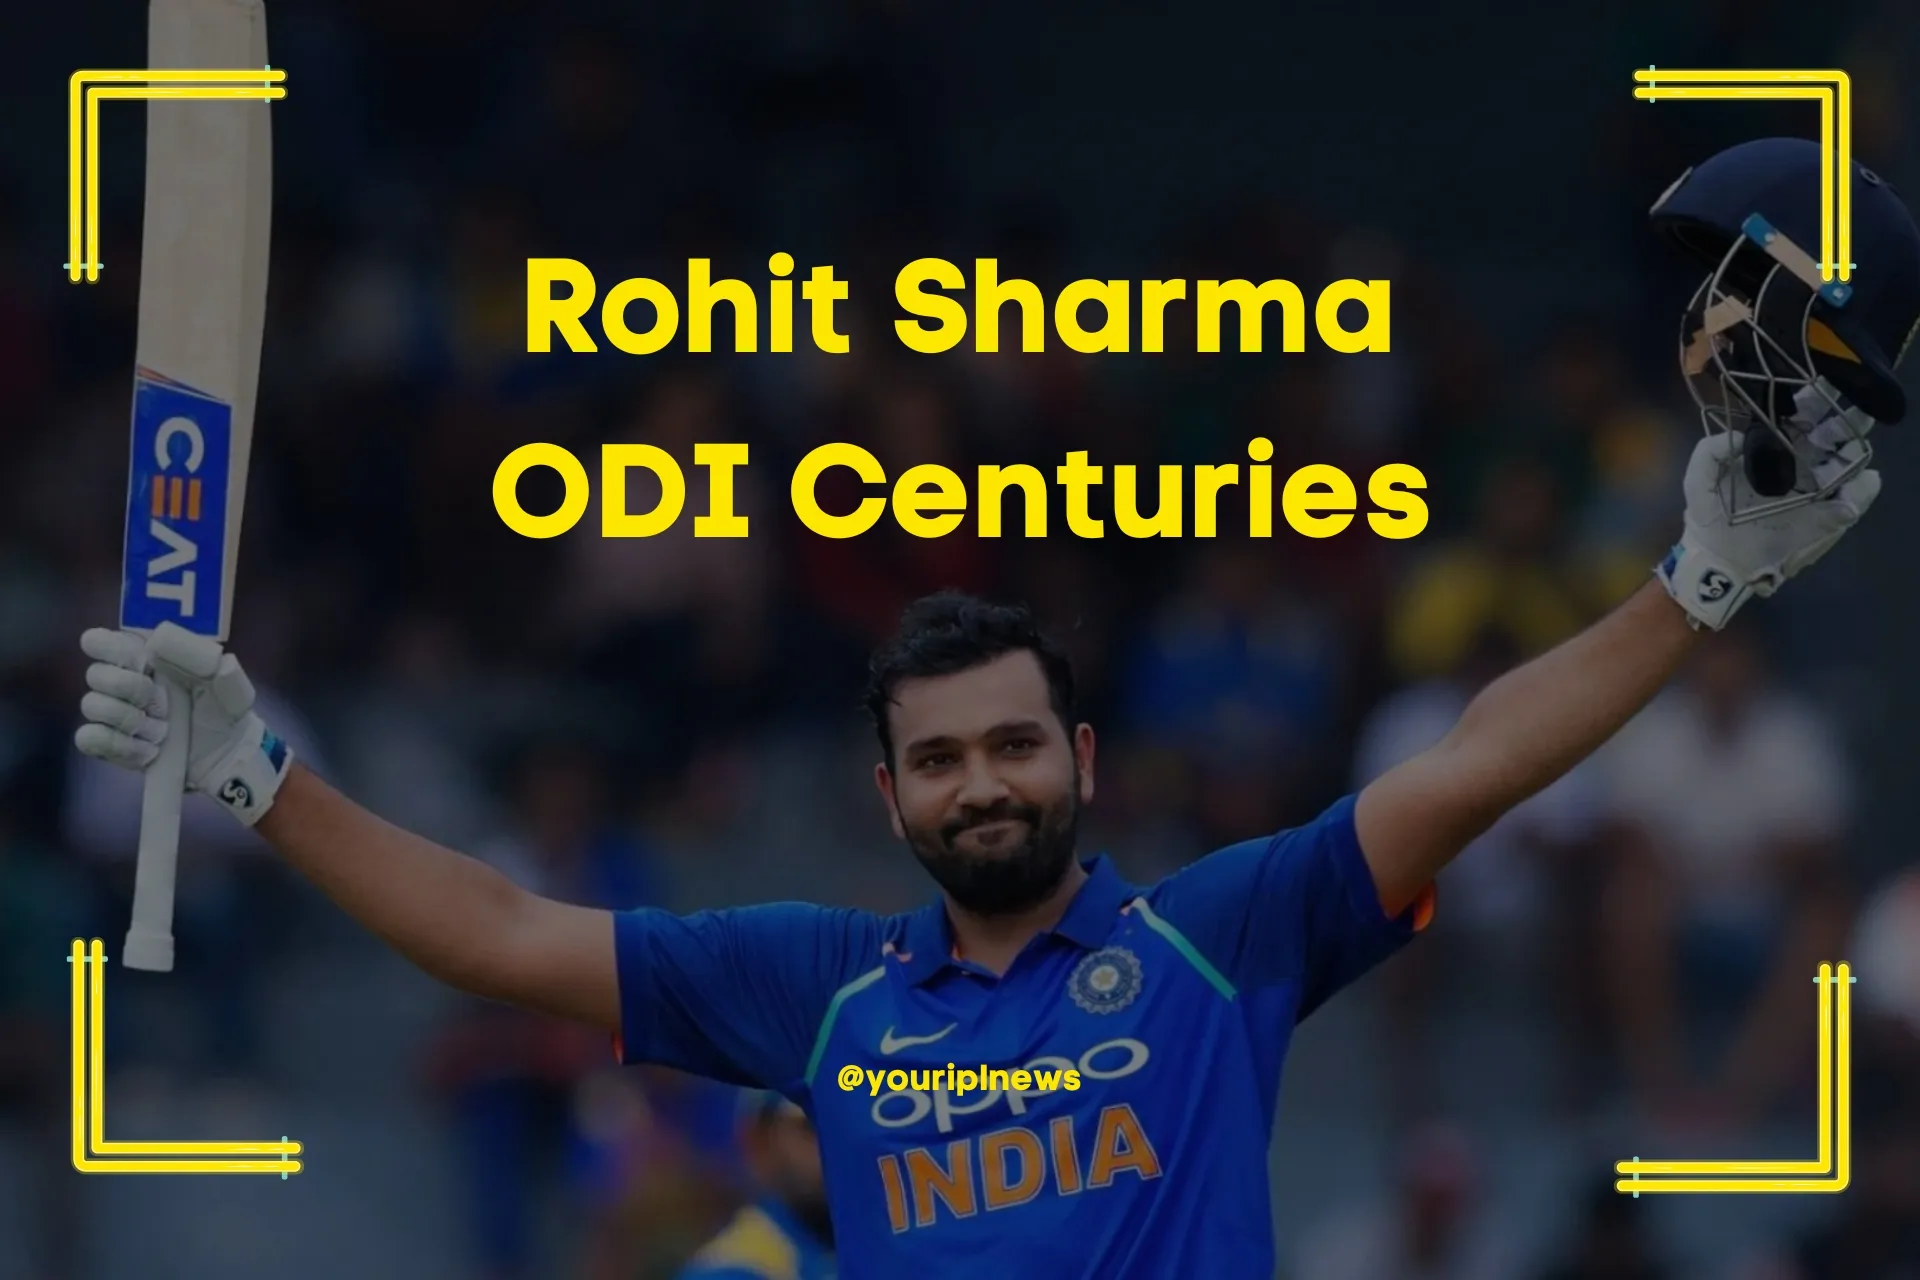 Rohit Sharma ODI Centuries